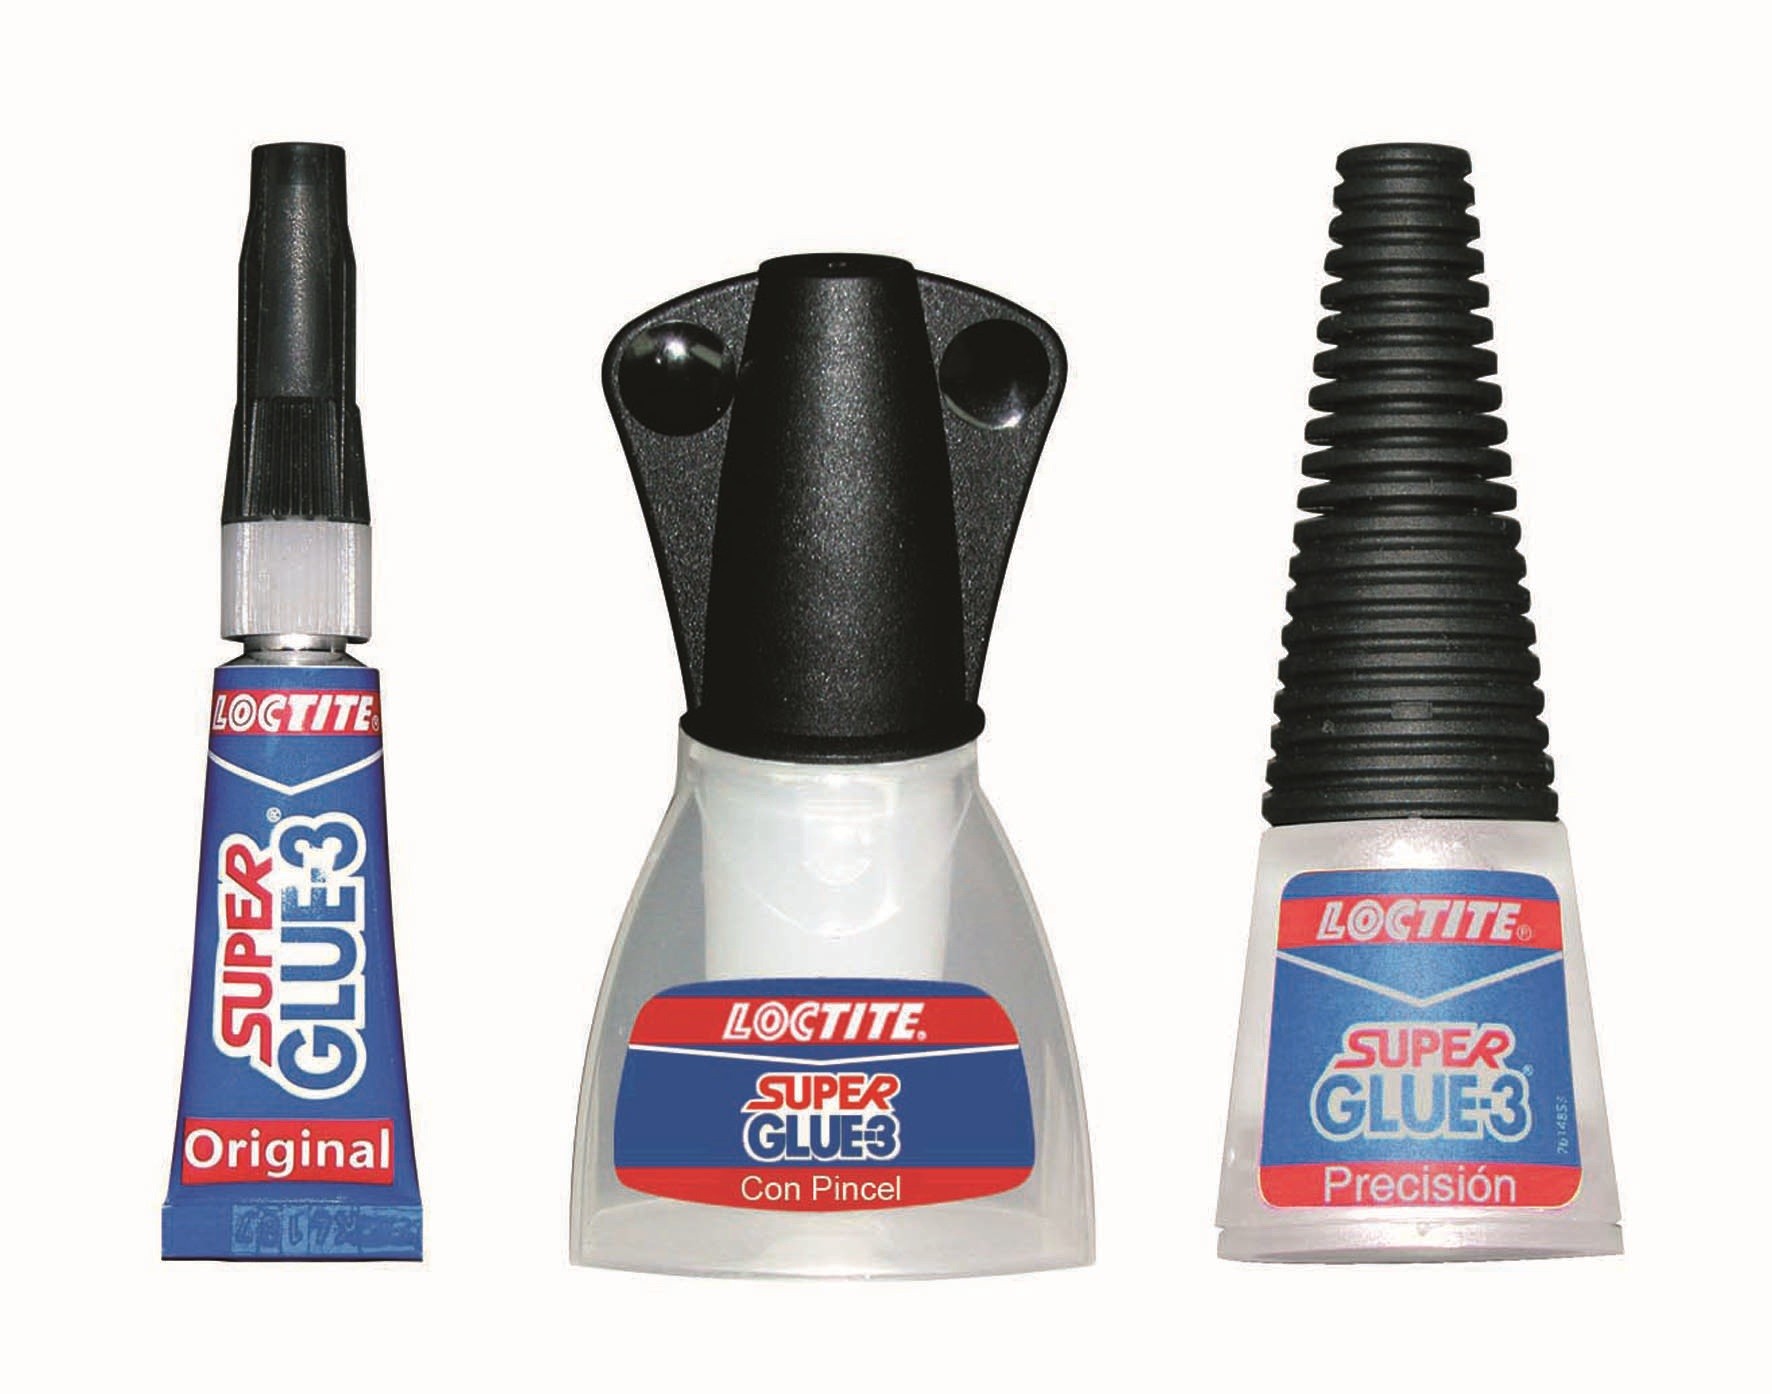 Loctite Super Glue-3 XXL adhesivo instantáneo 20 gr